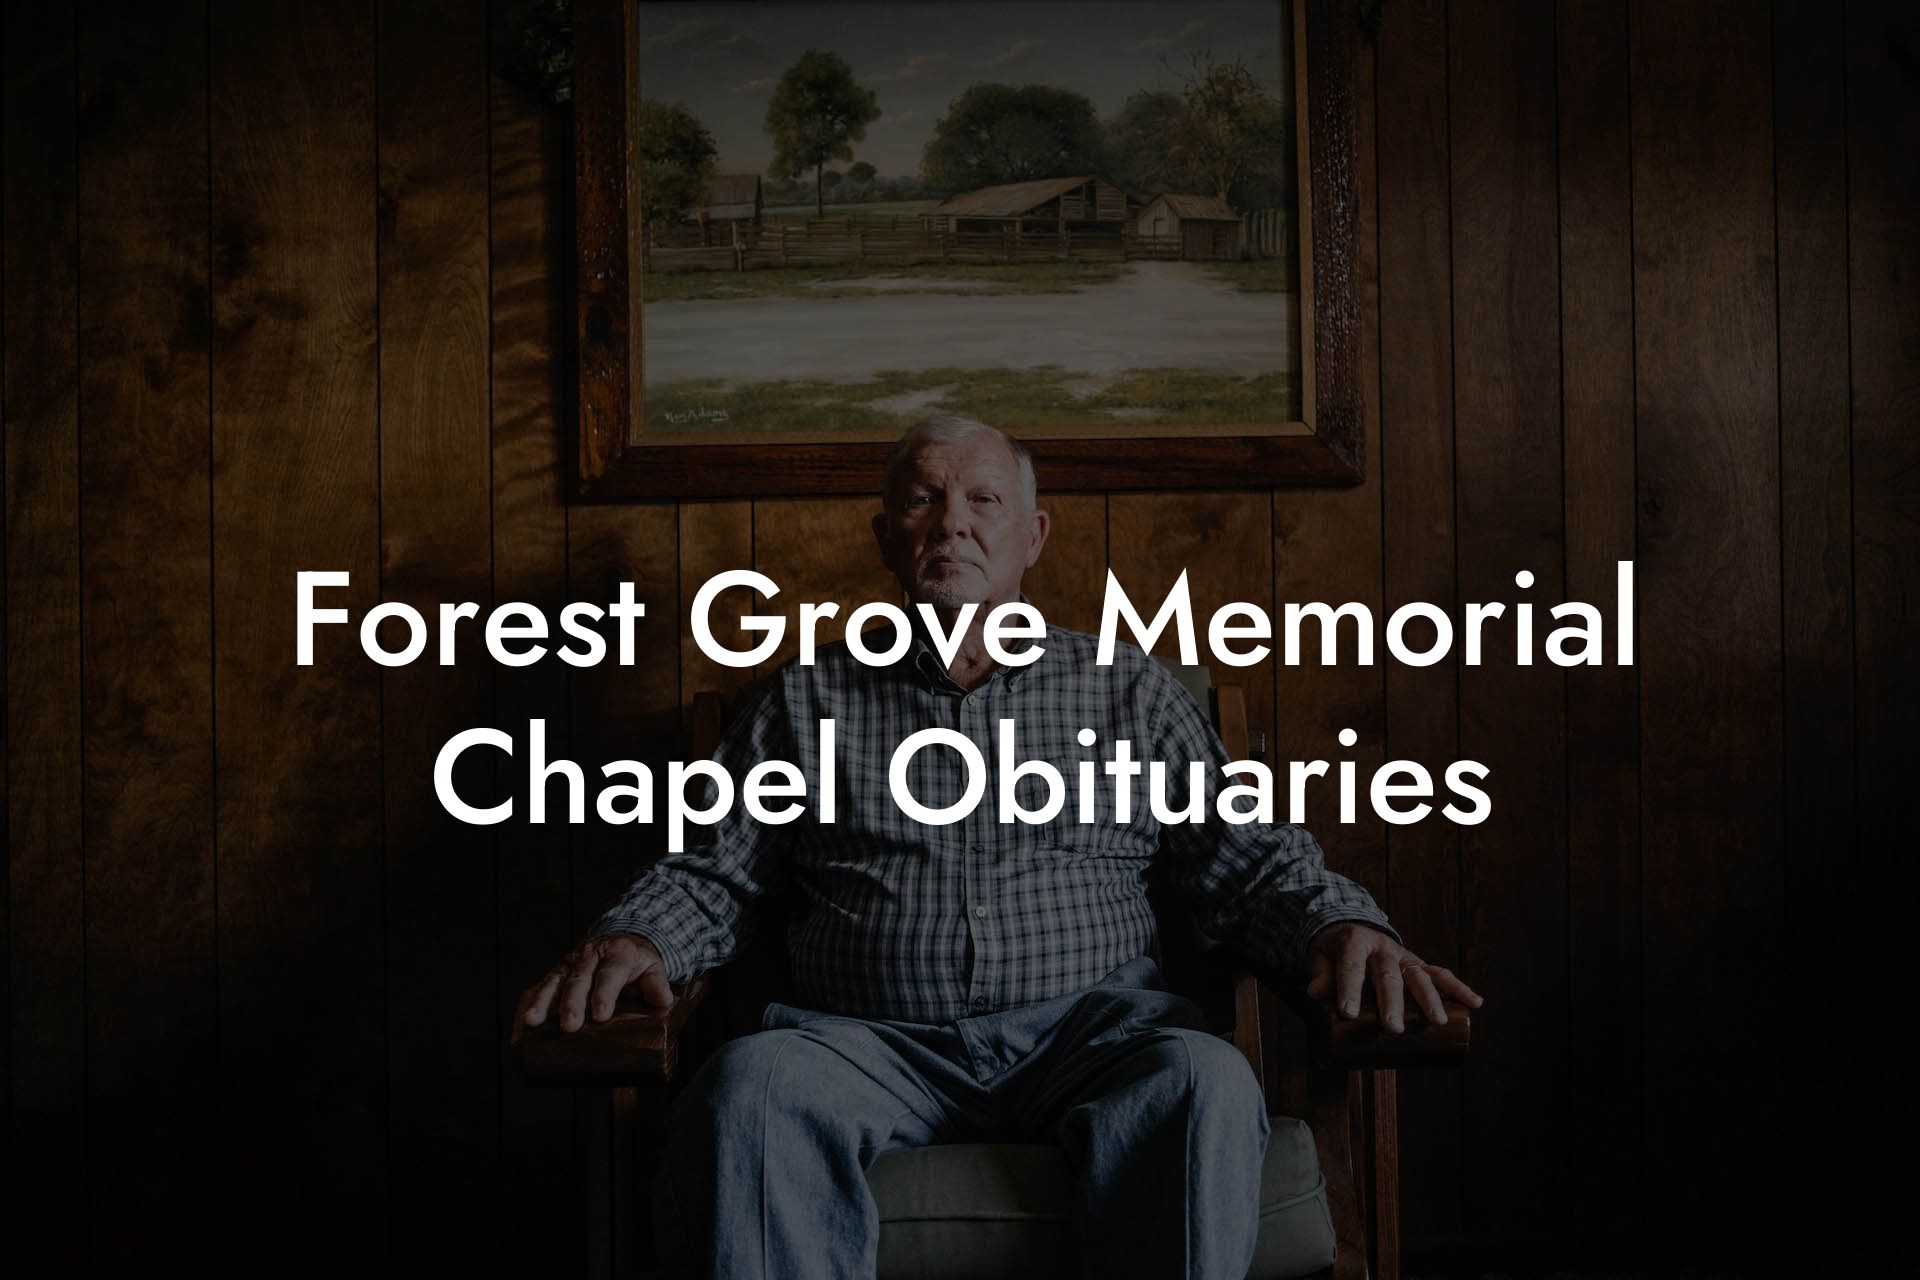 Forest Grove Memorial Chapel Obituaries